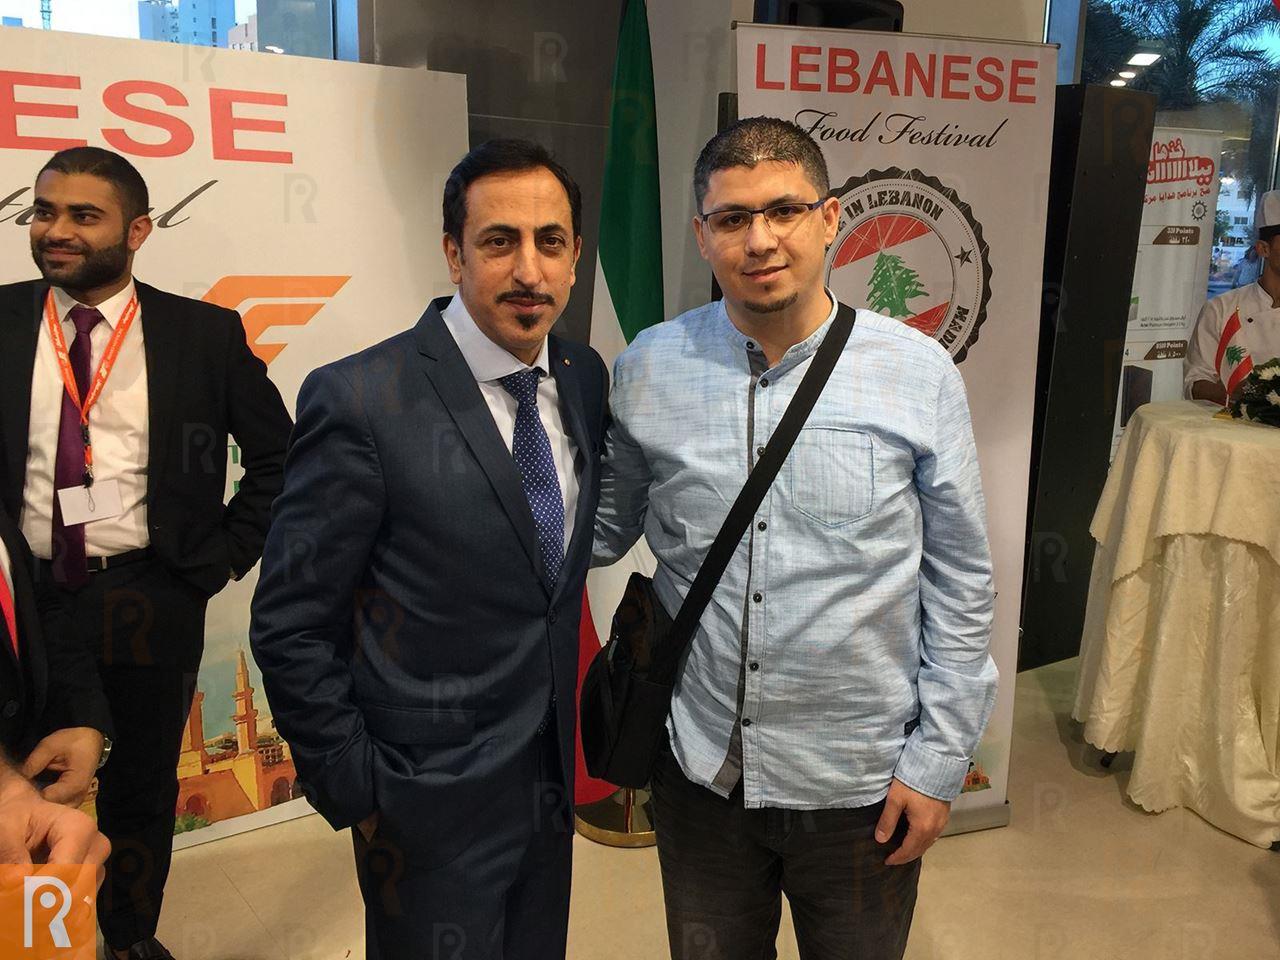 Lebanese Ambassador to Kuwait Maher Kheir with Mr. Ali Sleiman, Co-Founder of Rinnoo.net